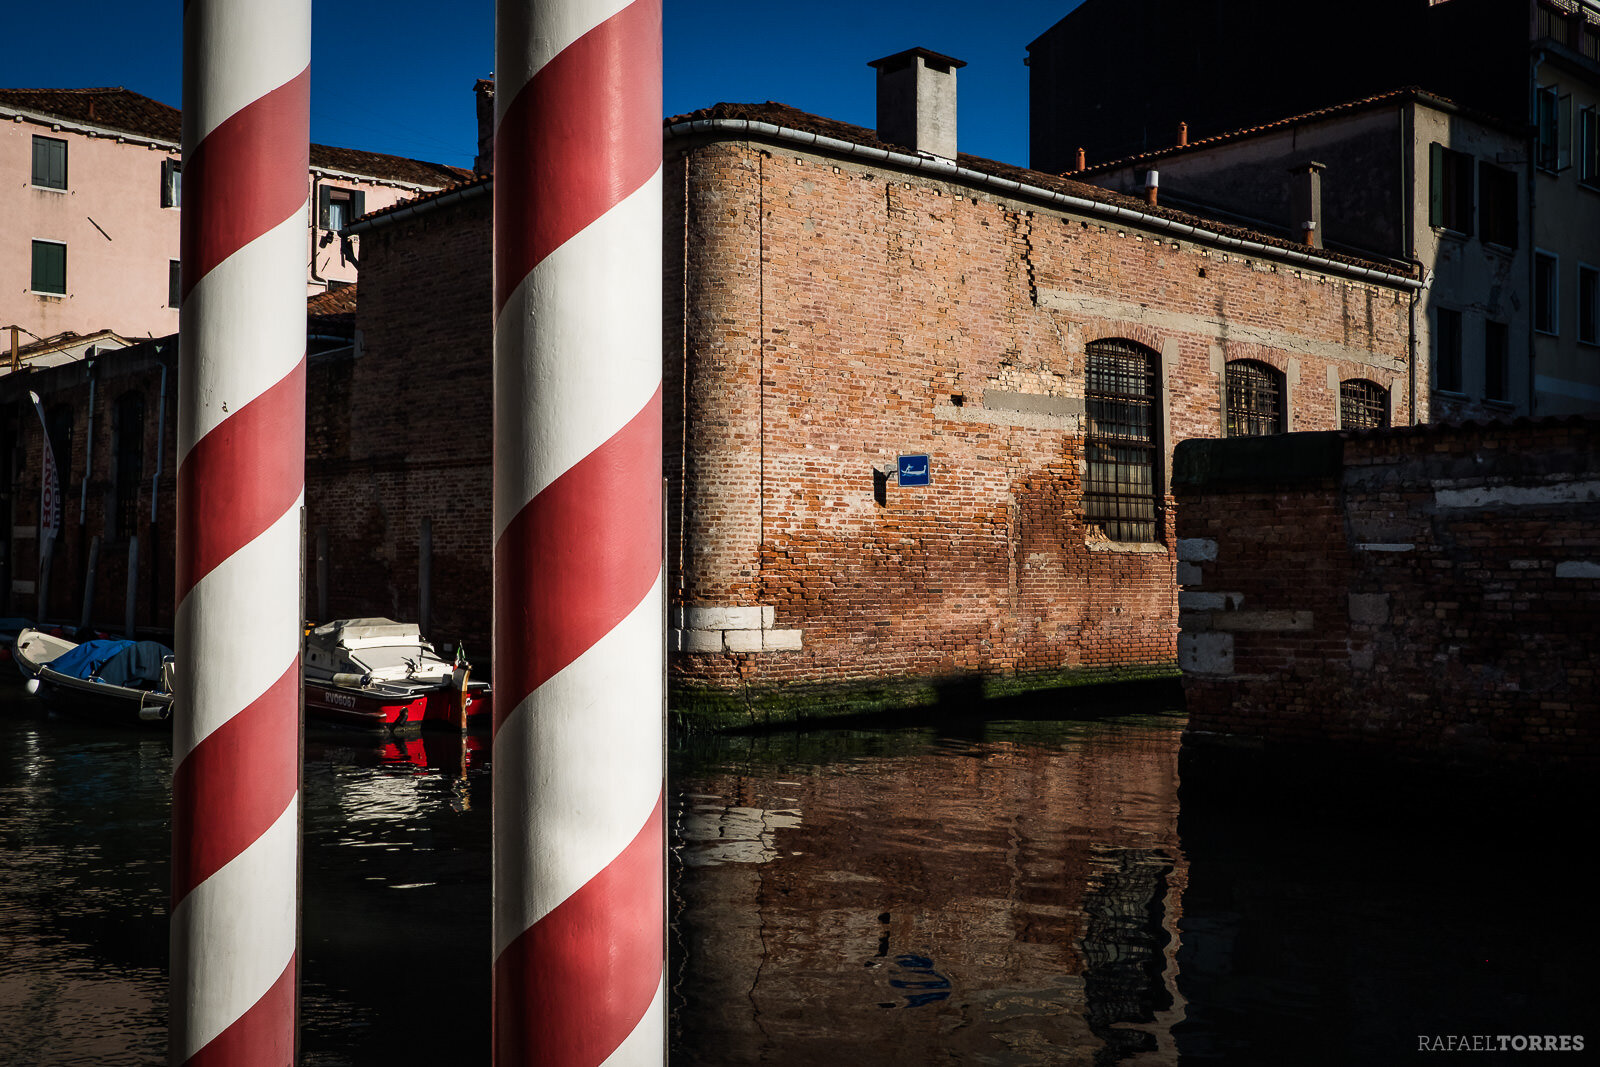 Venecia-burano-murano-verona-rafael-torres-photo-italia-fotografo--138.jpg